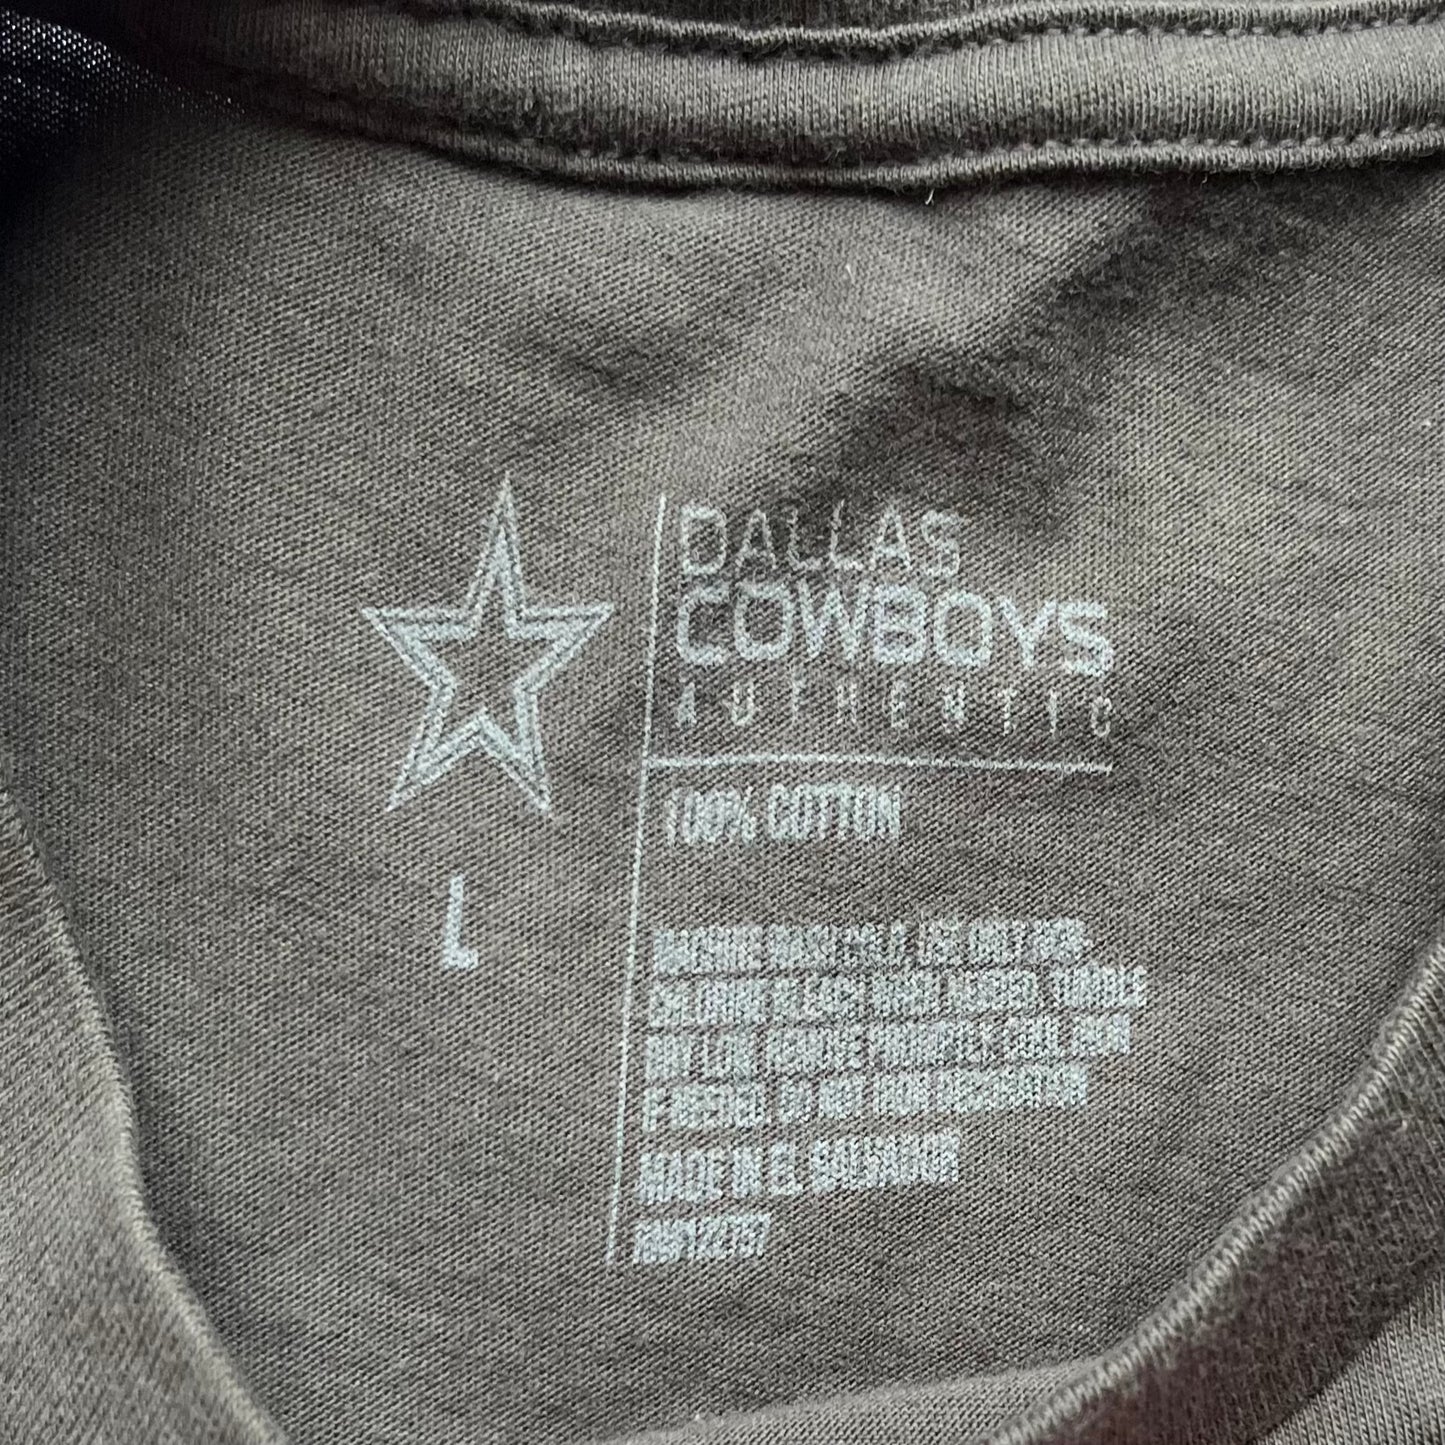 Dallas Cowboys - NFL - Dallas Cowboys Authentic Tee (Large)